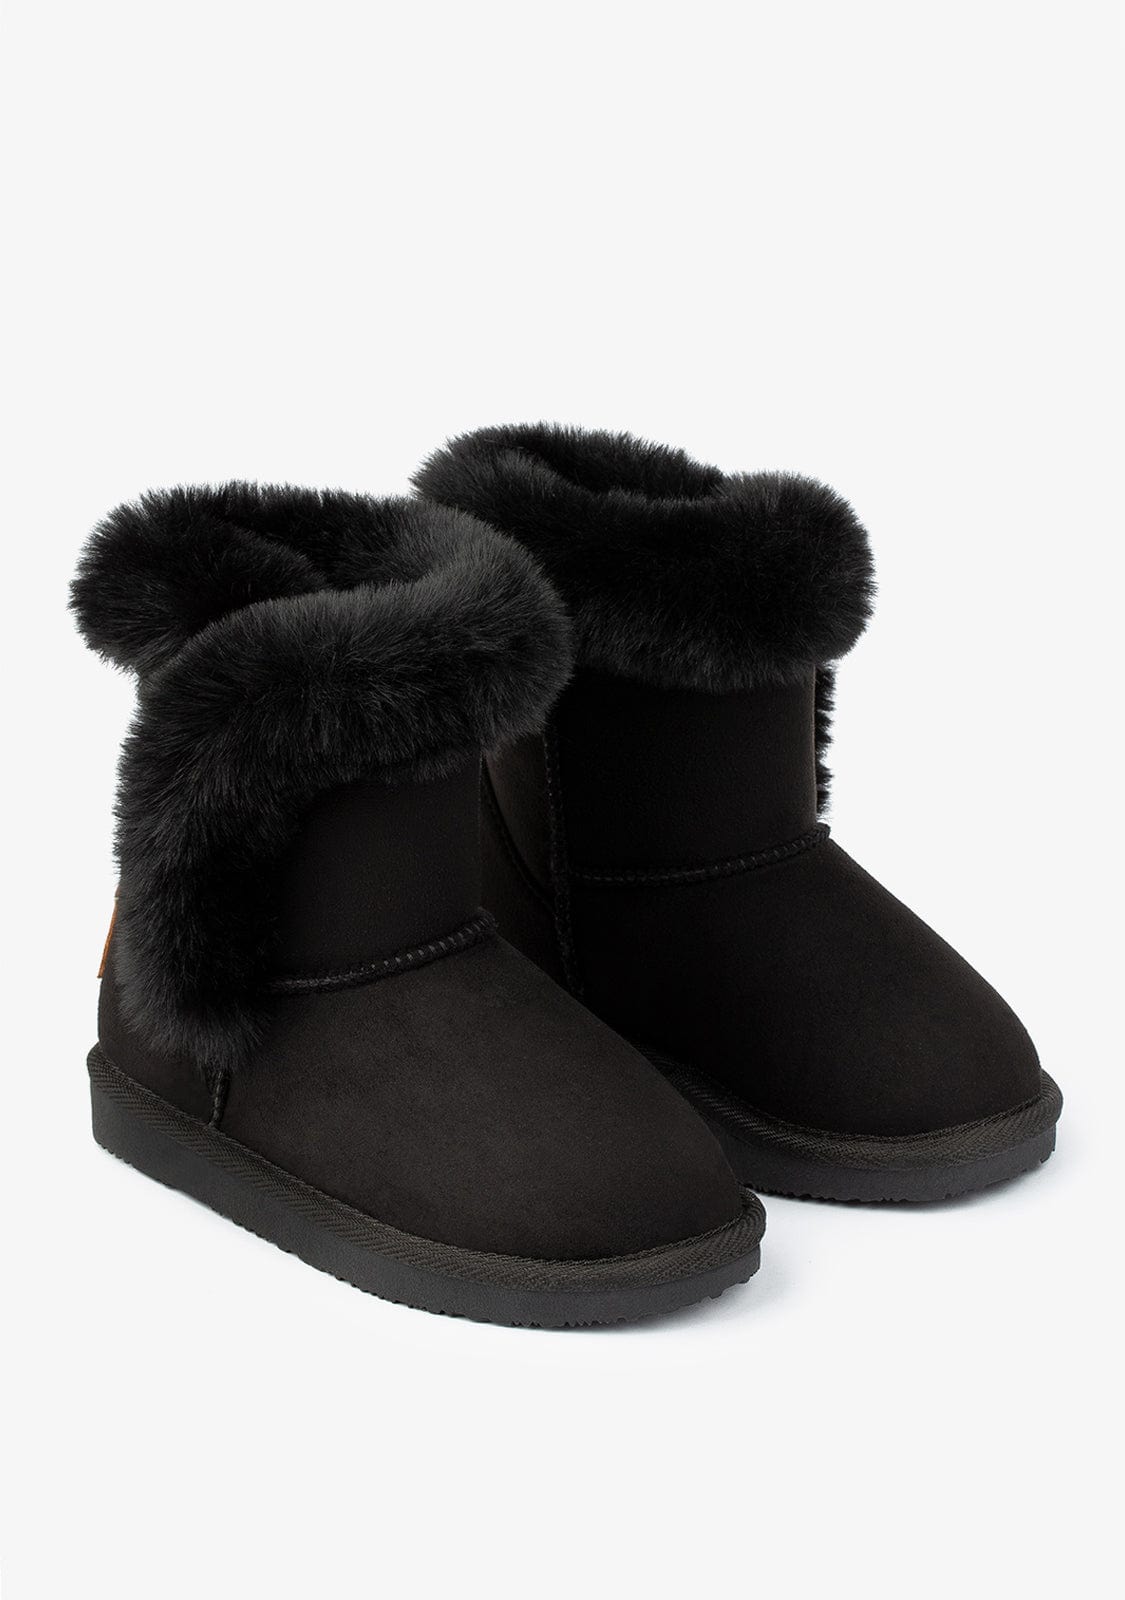 Black Fur Australian Boots